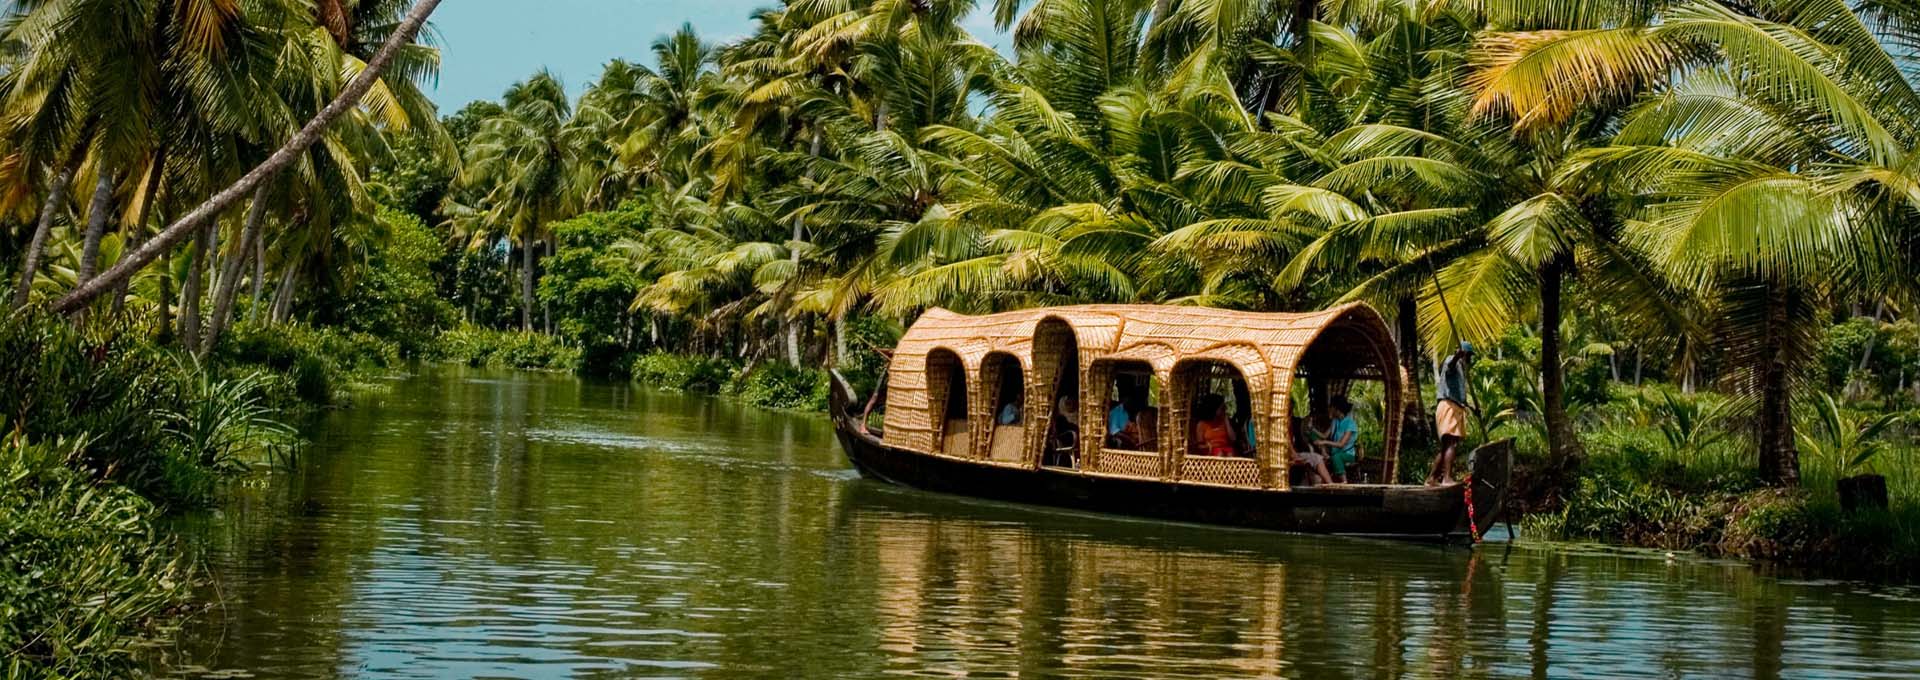 Houseboat & Backwaters Tour in Kerala